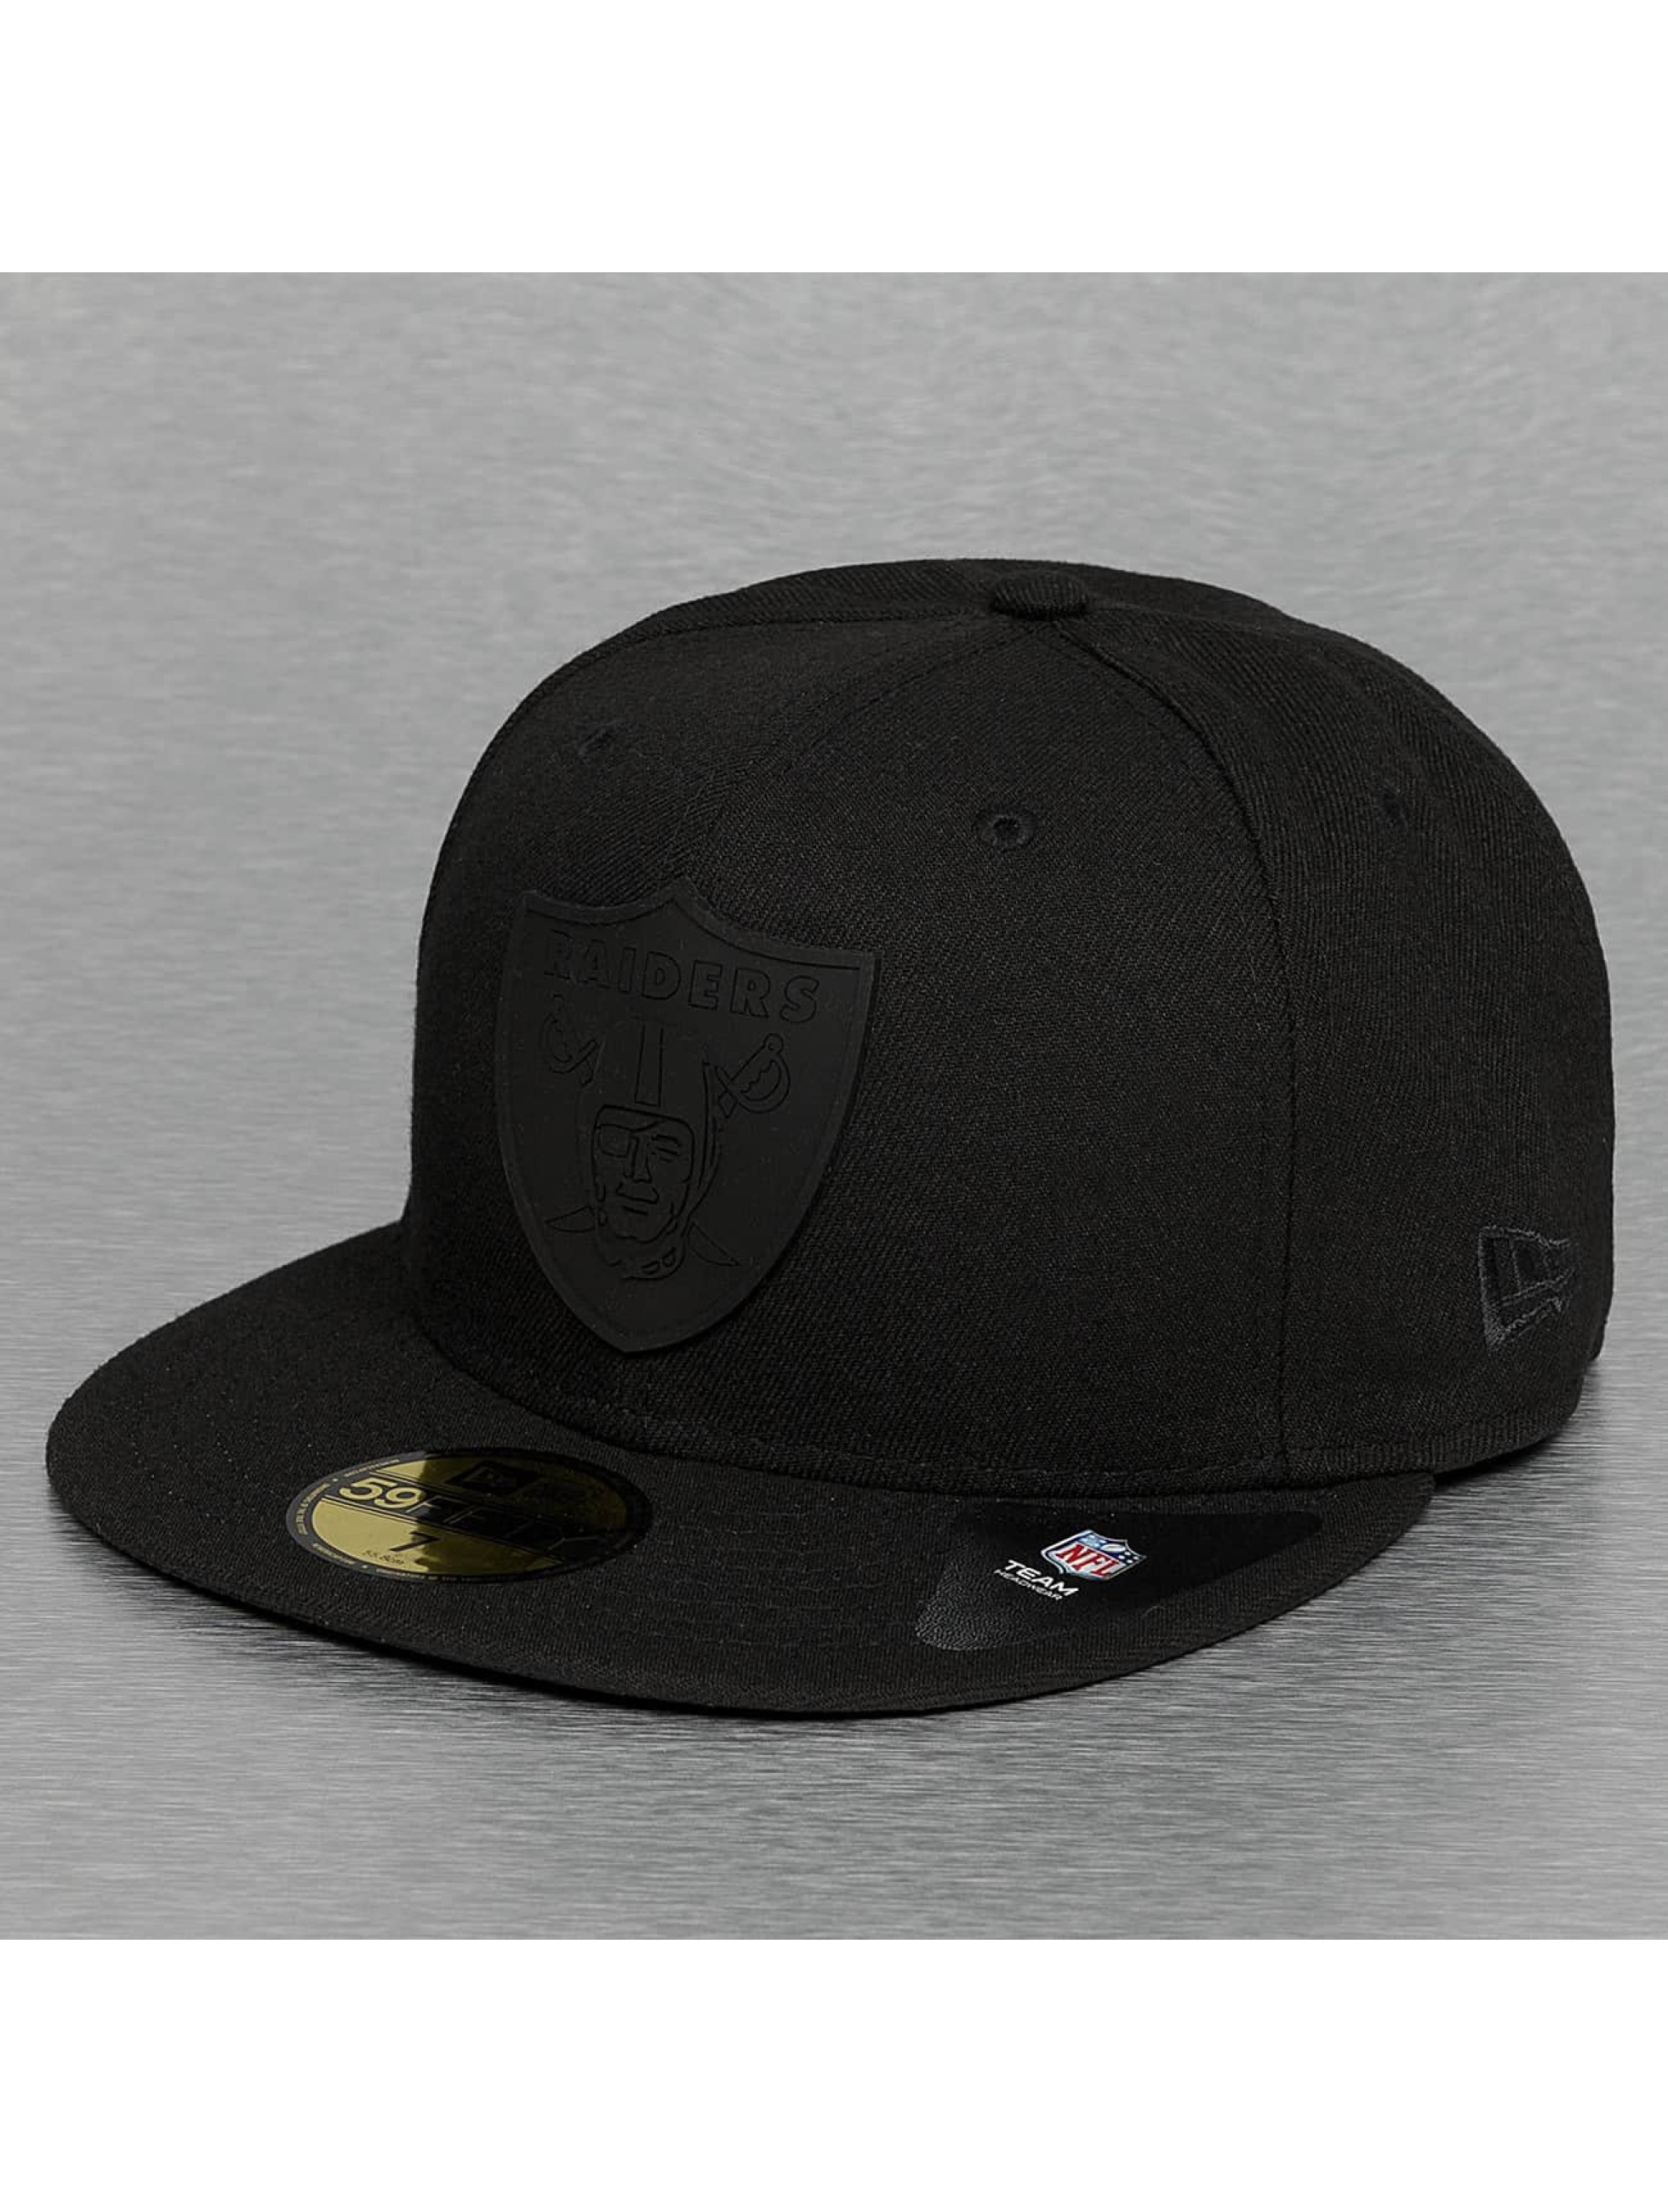 New Era Casquette / Fitted Team Rubber Logo Oakland Raiders en noir